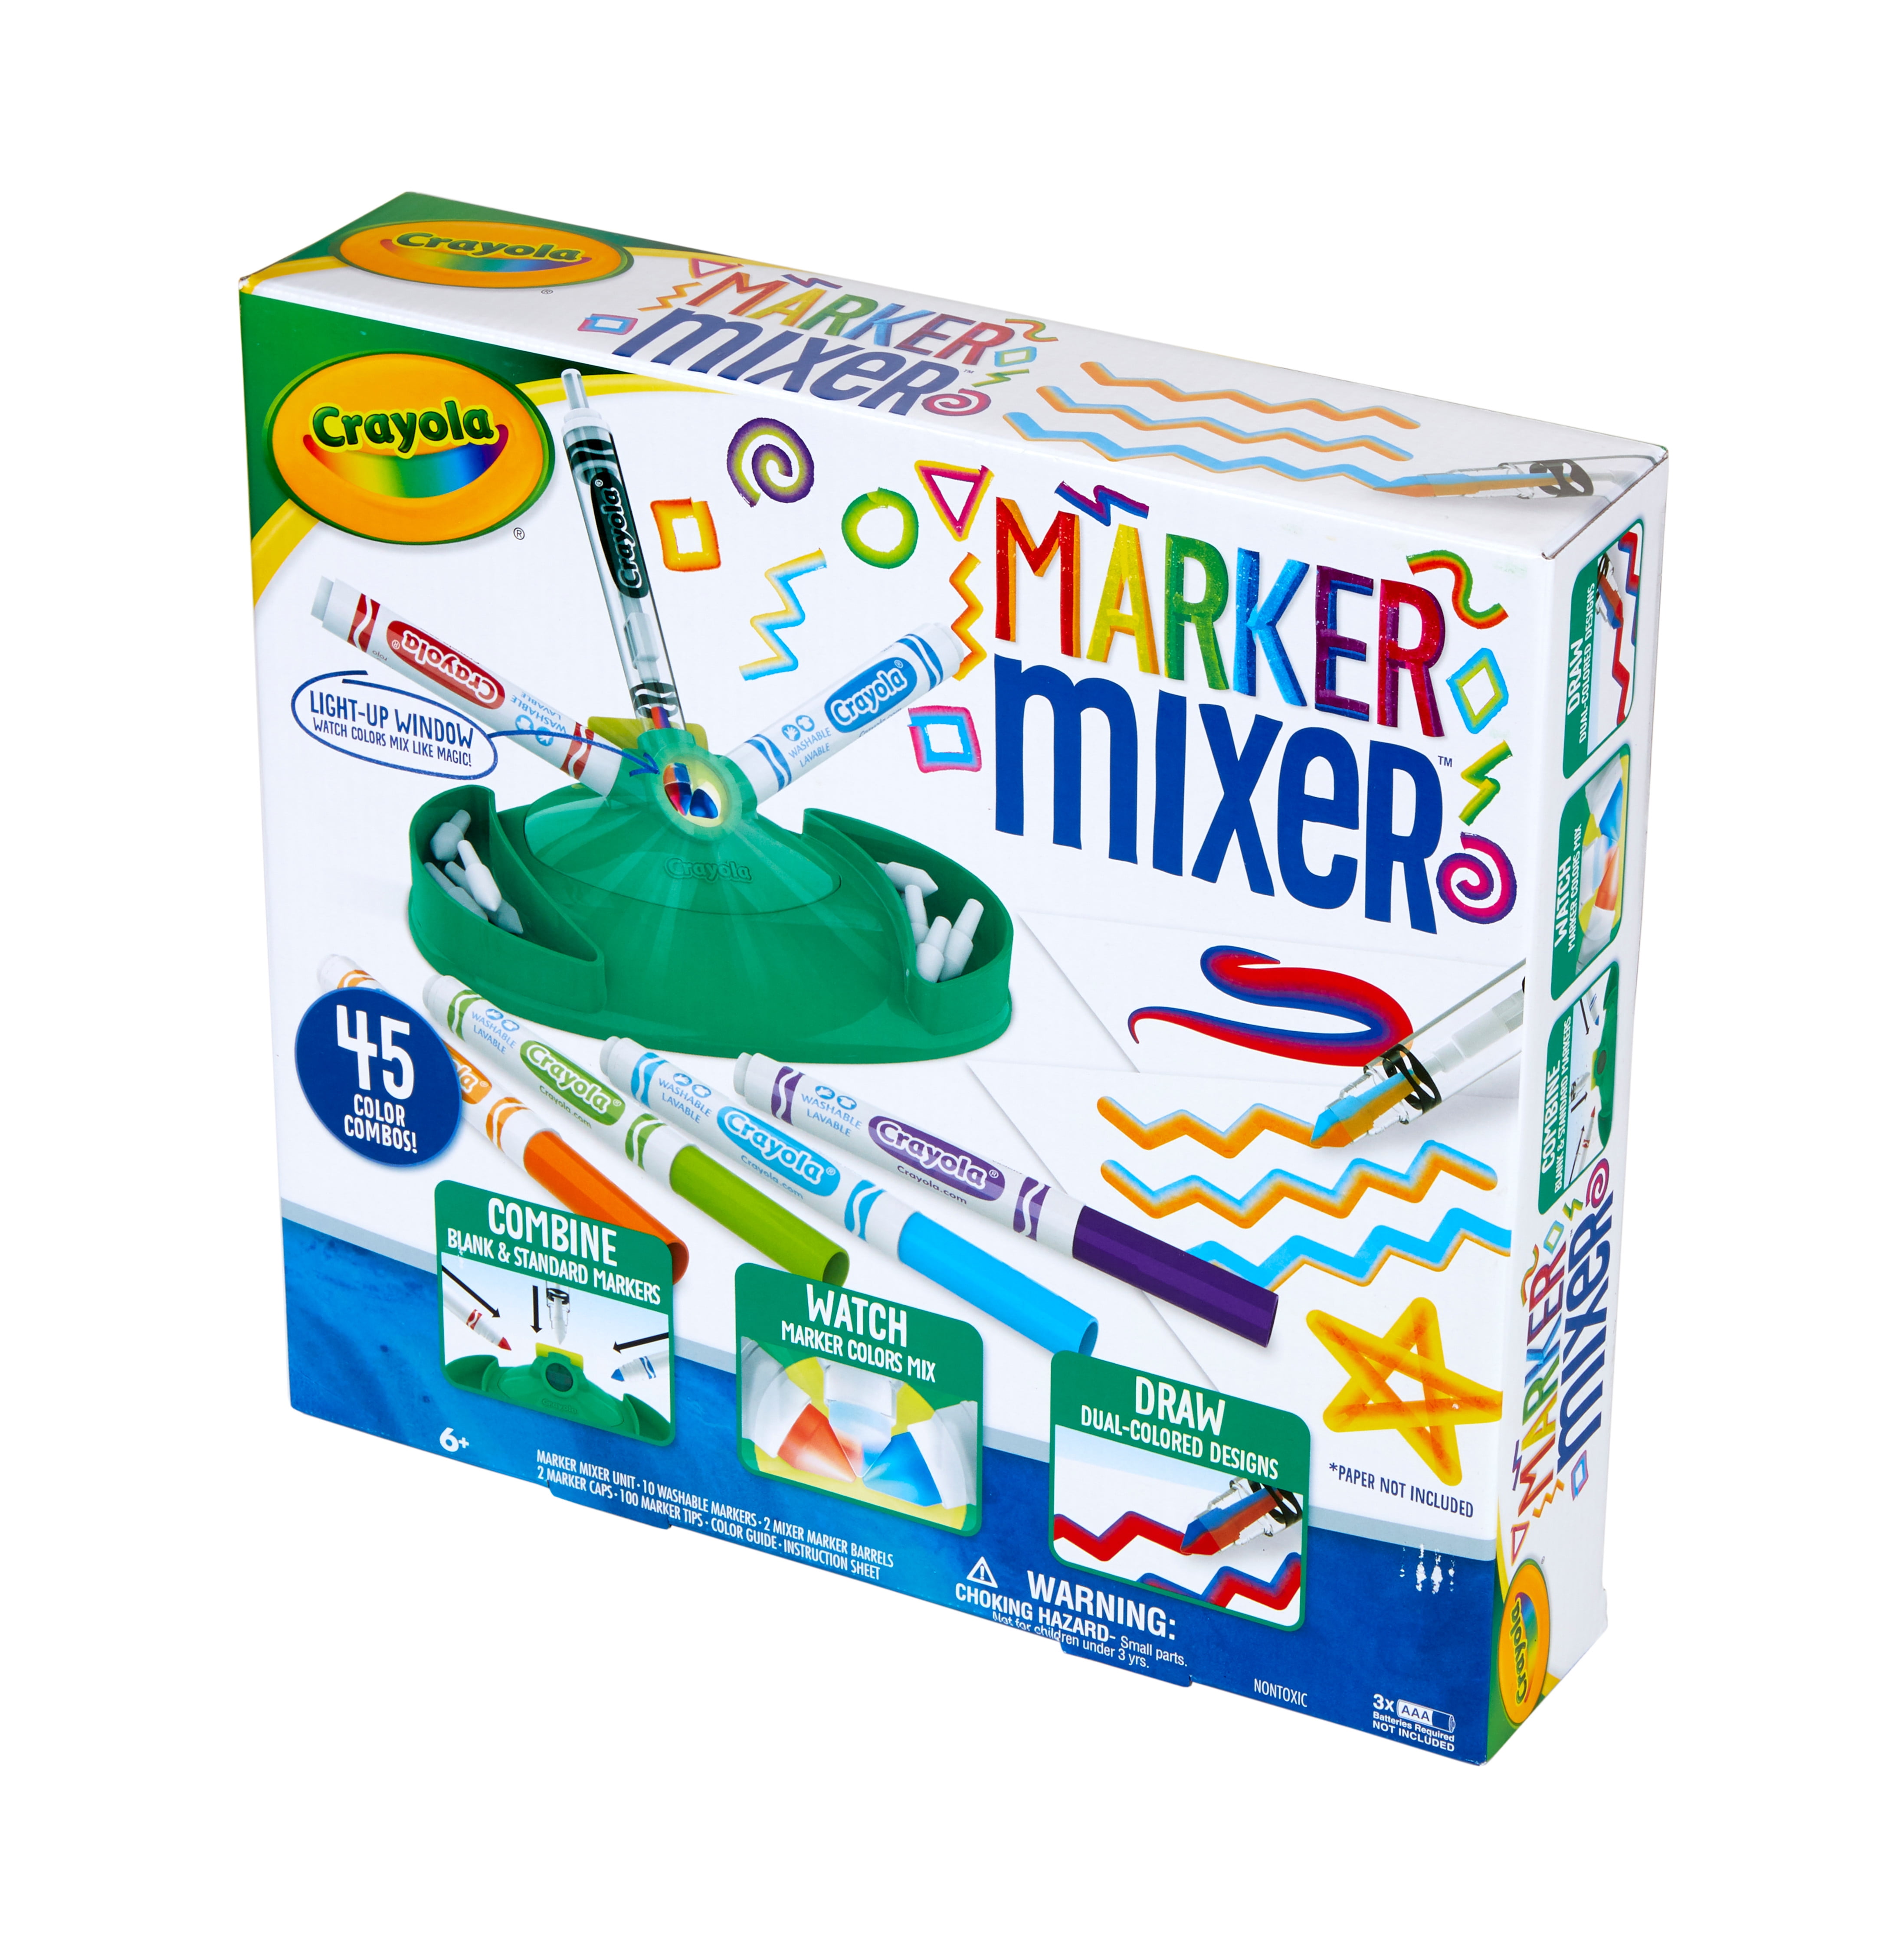 Crayola Marker Mixer Art Kit, Beginner Child, over 50 Pieces 